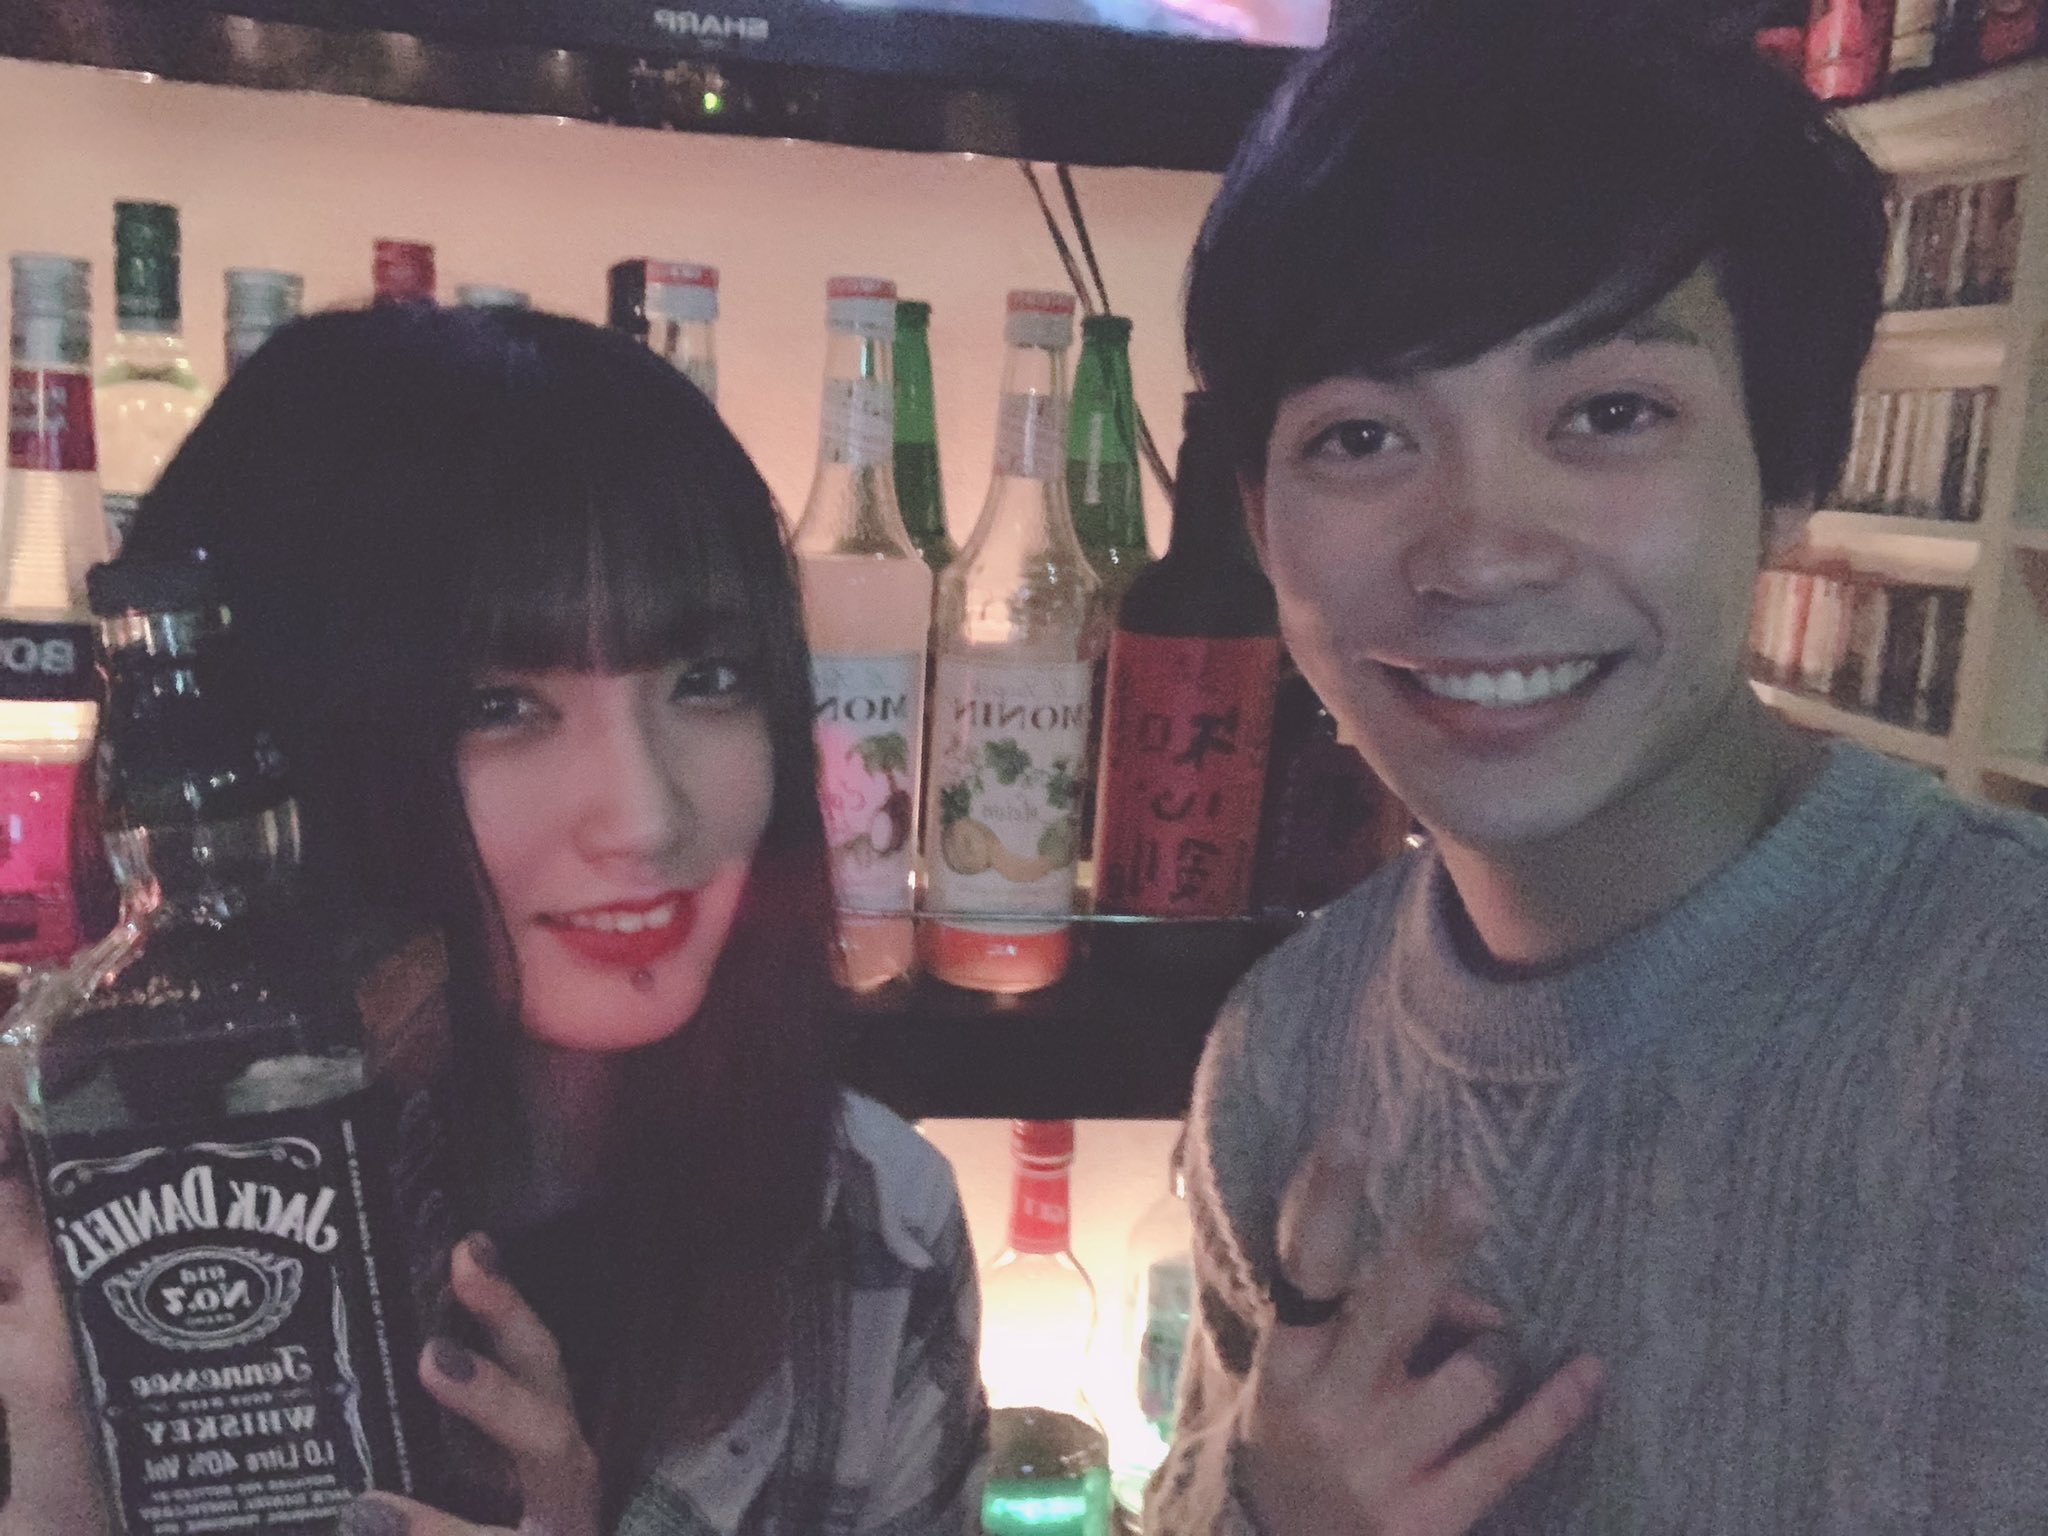 https://bar-rockaholic.jp/shibuya/blog/F86500A2-8563-4F11-8E9F-A5C4D8338D02.jpeg